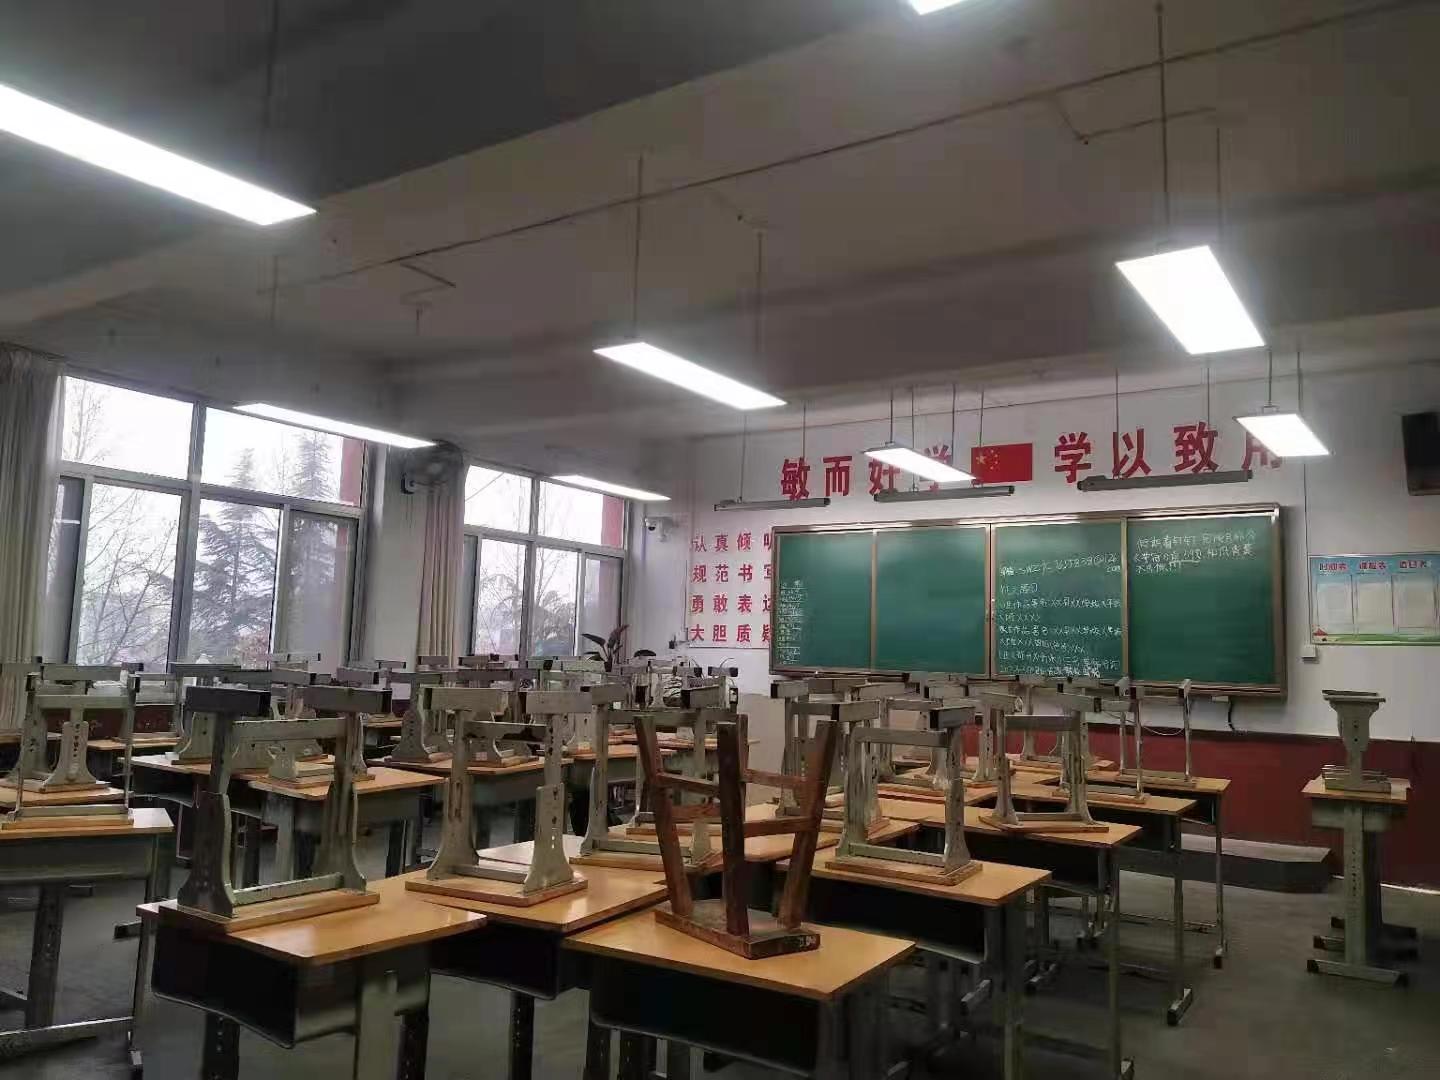 Led classroom light no flash 